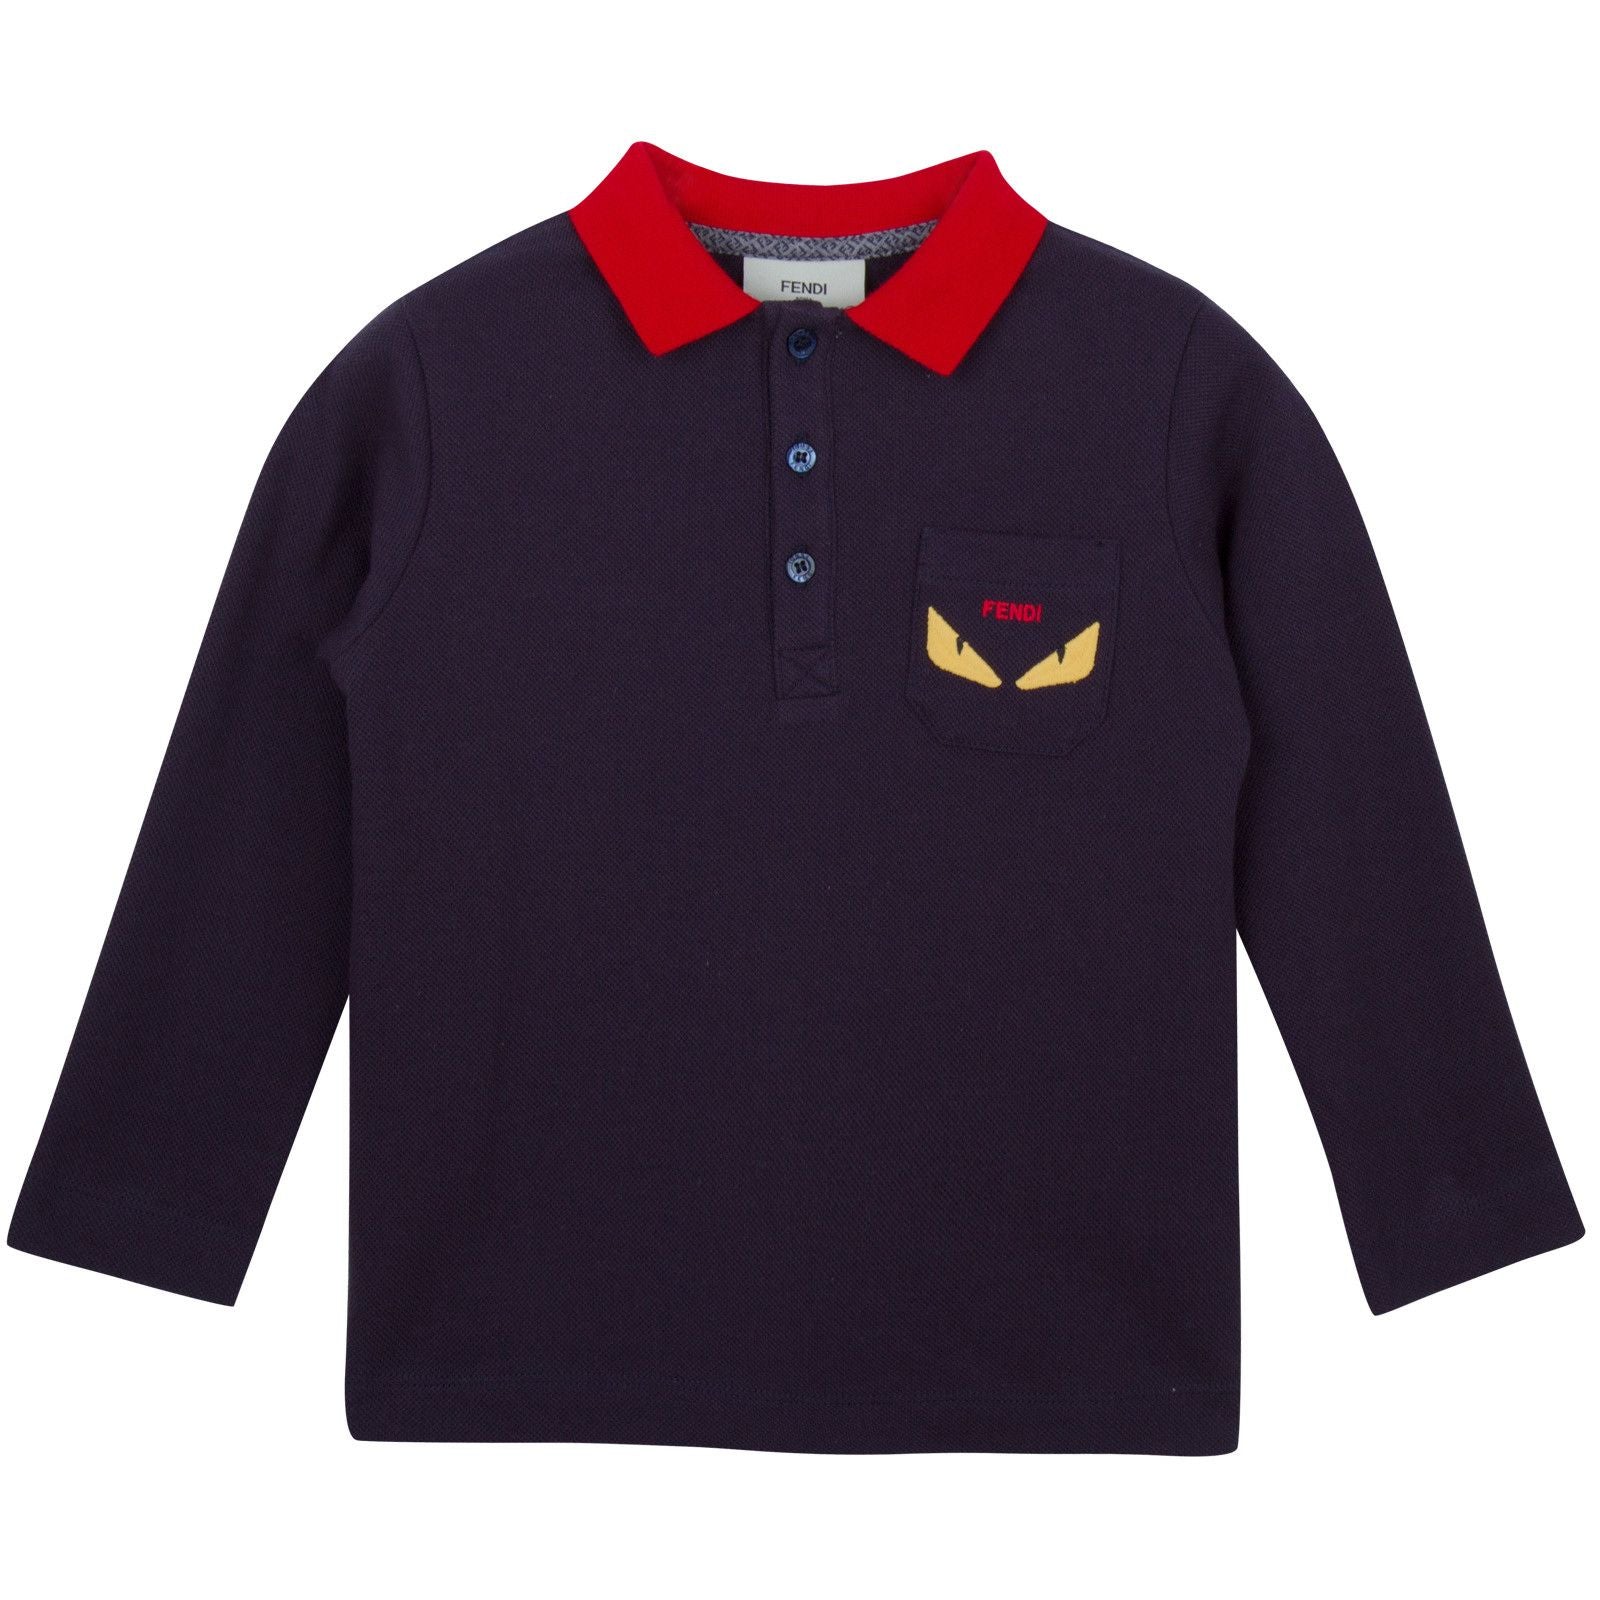 Boys Blue Embroidered Monster Cotton Polo Shirt - CÉMAROSE | Children's Fashion Store - 1